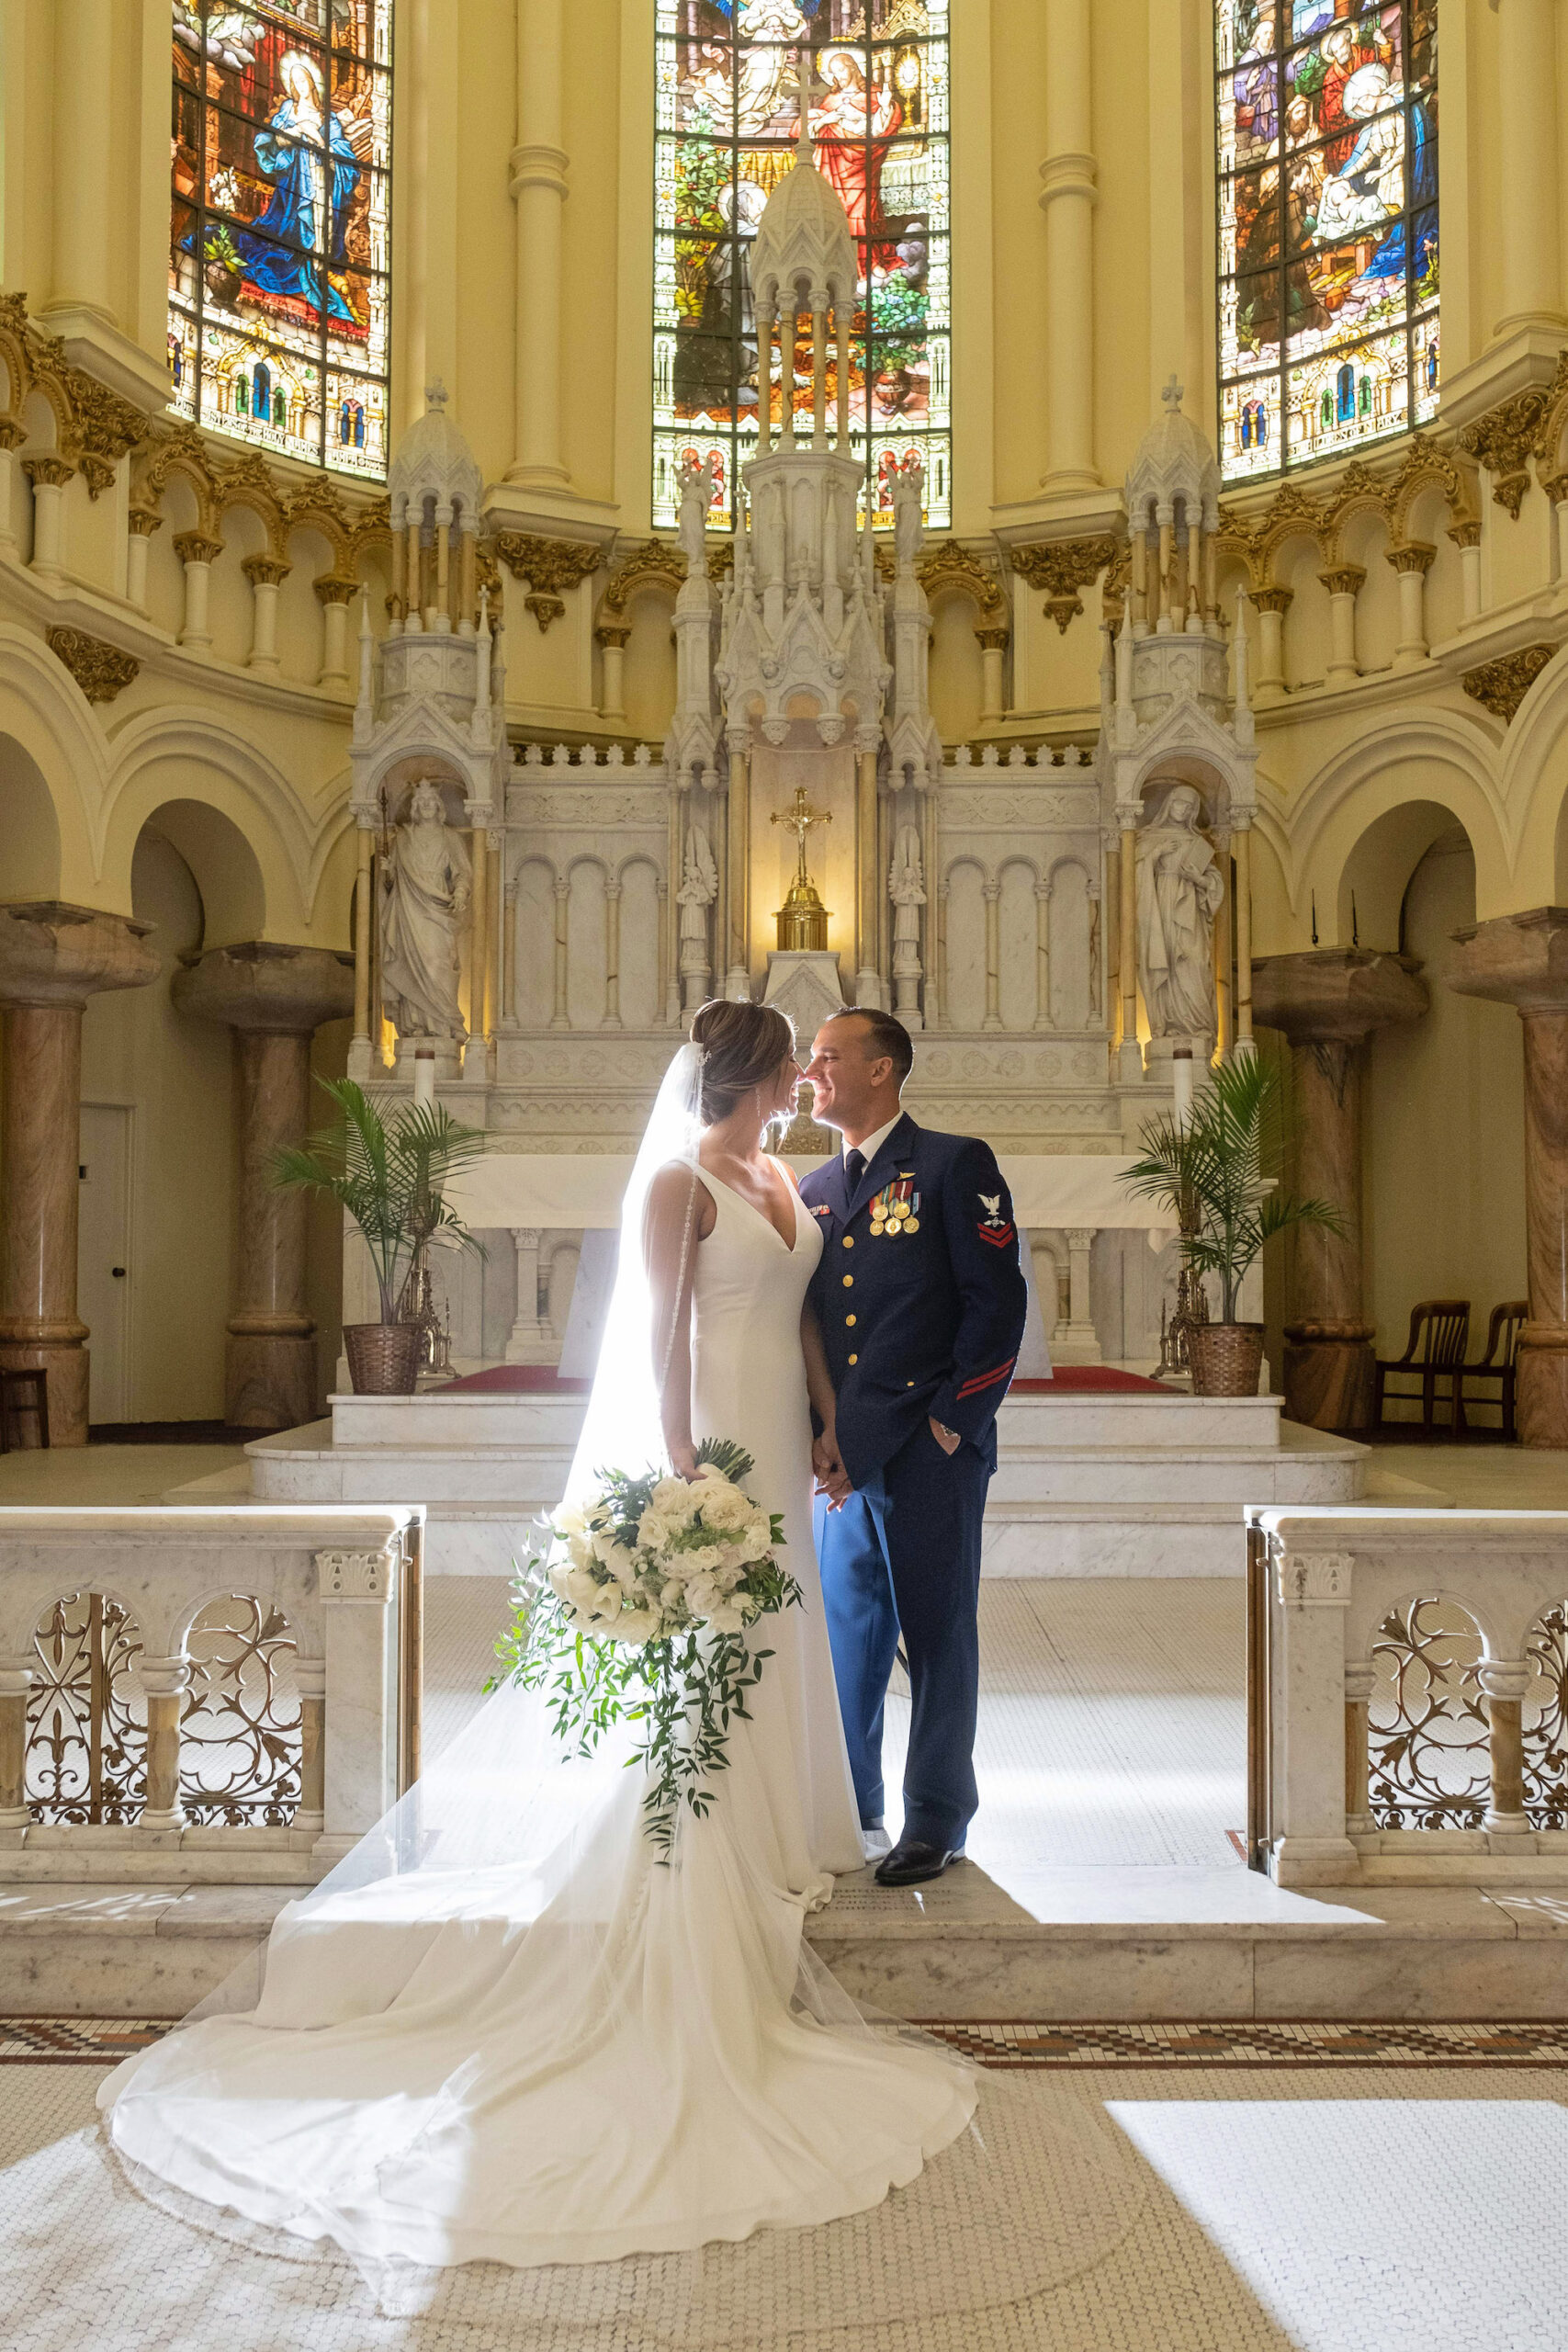 Romantic Bride and Groom Wedding Portrait | Tampa Bay Sacred Heart Catholic Church Wedding Ceremony Inspiration